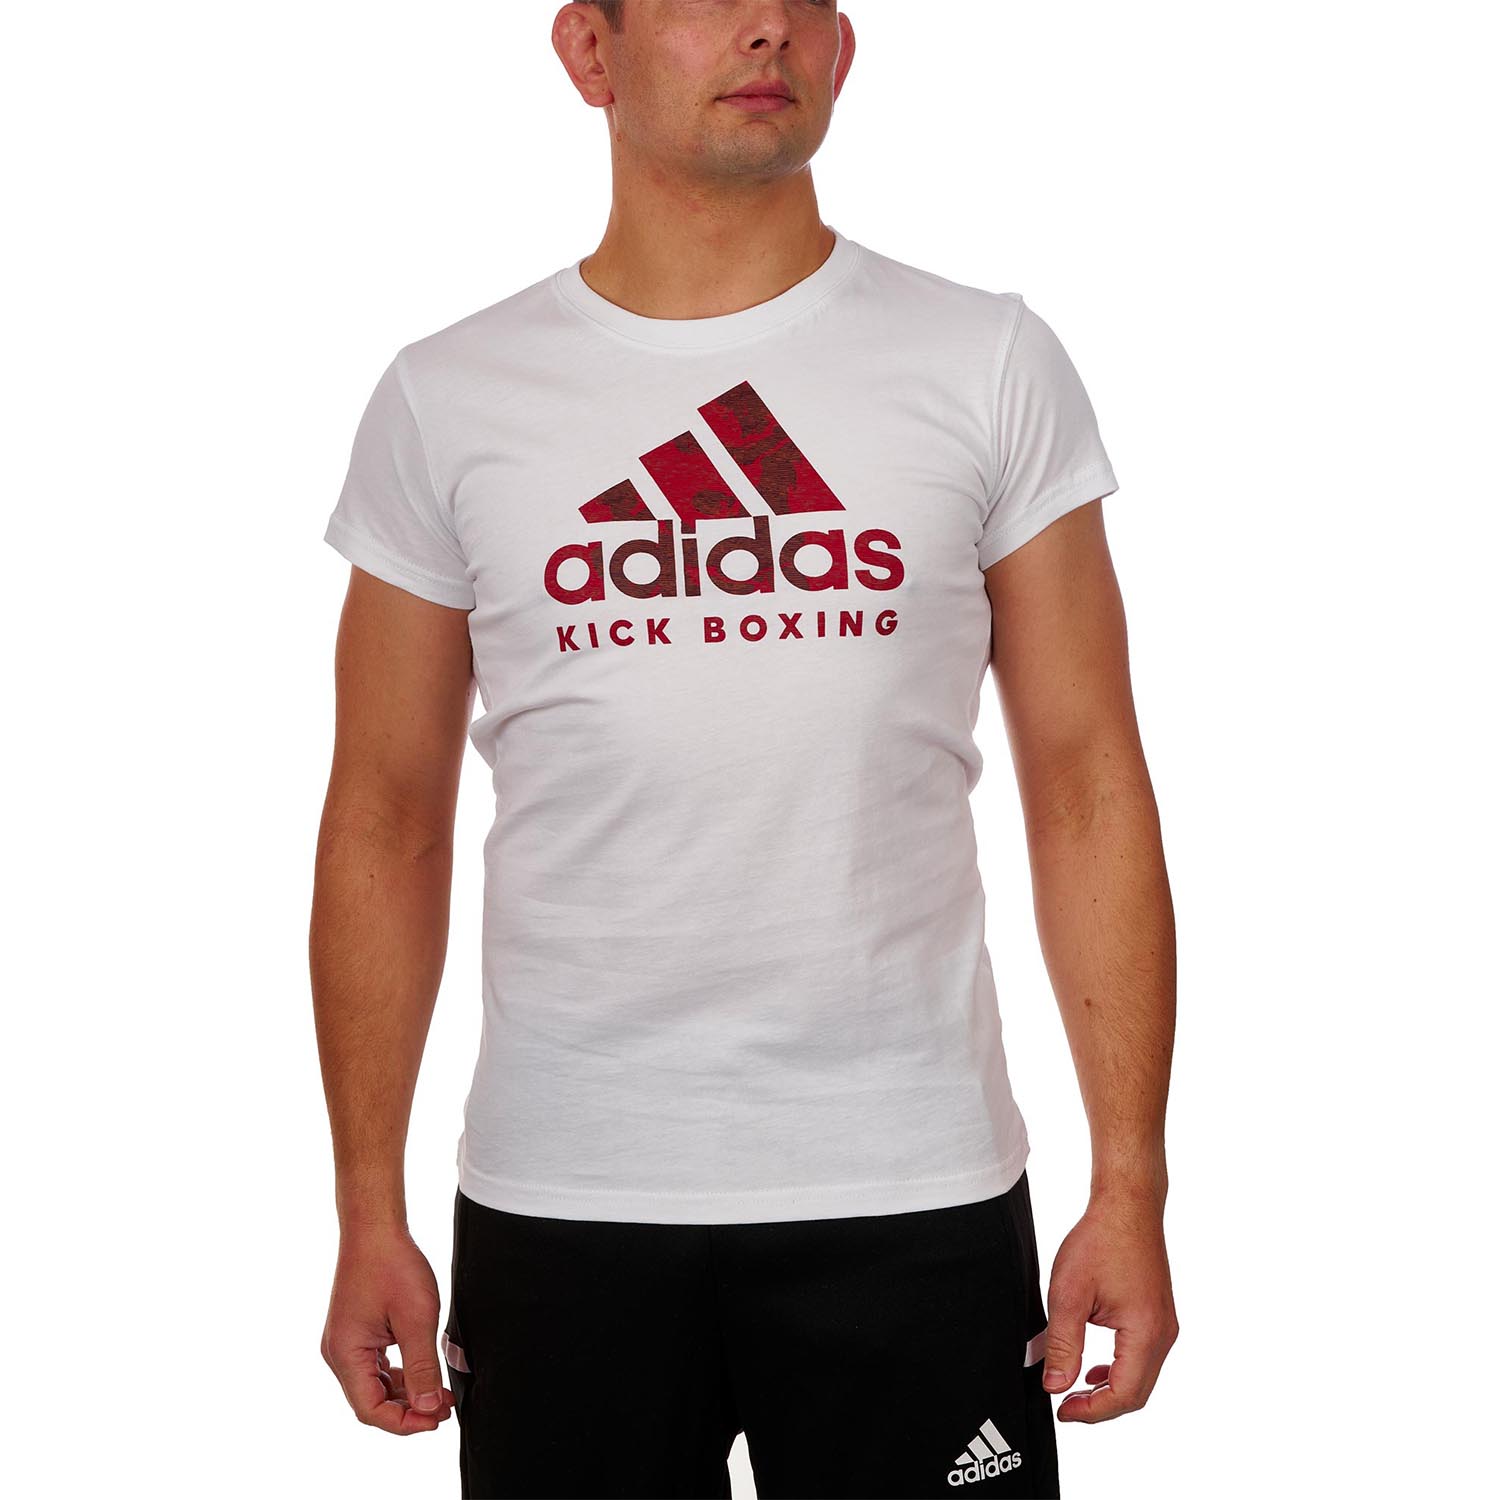 adidas T-Shirt, Badge Of Sport, Kickboxing, white, L